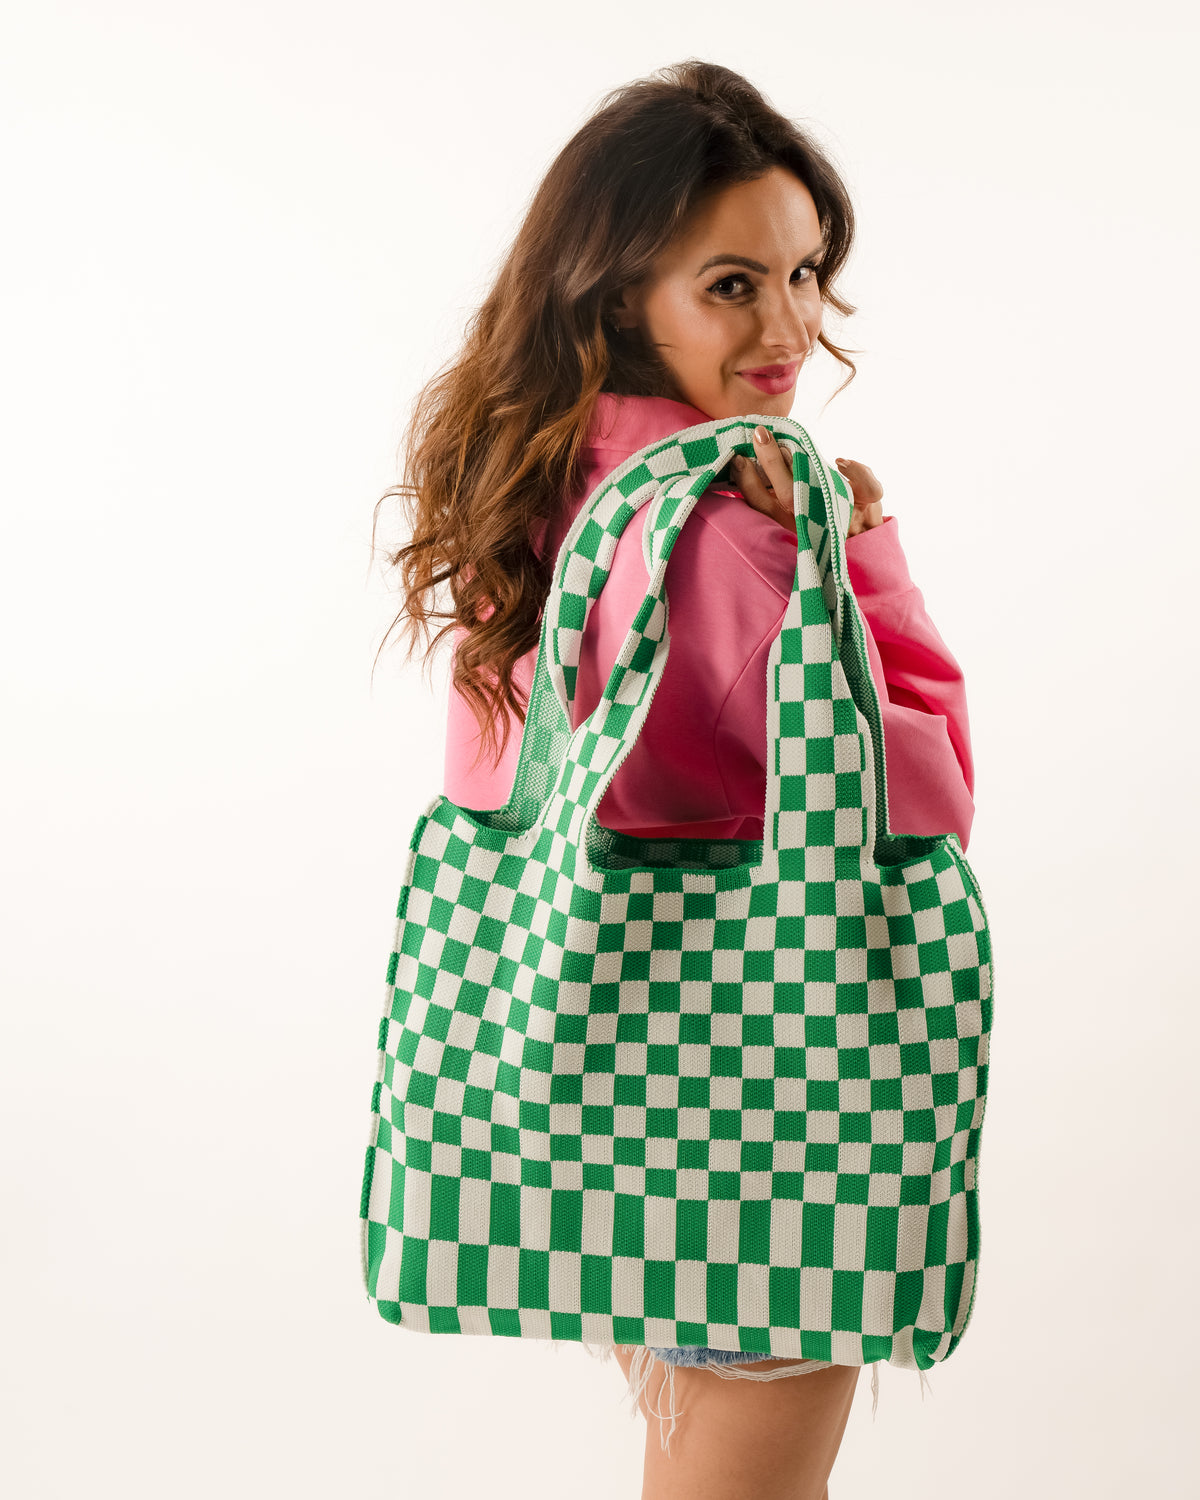 Checkered Tote Bag - Green